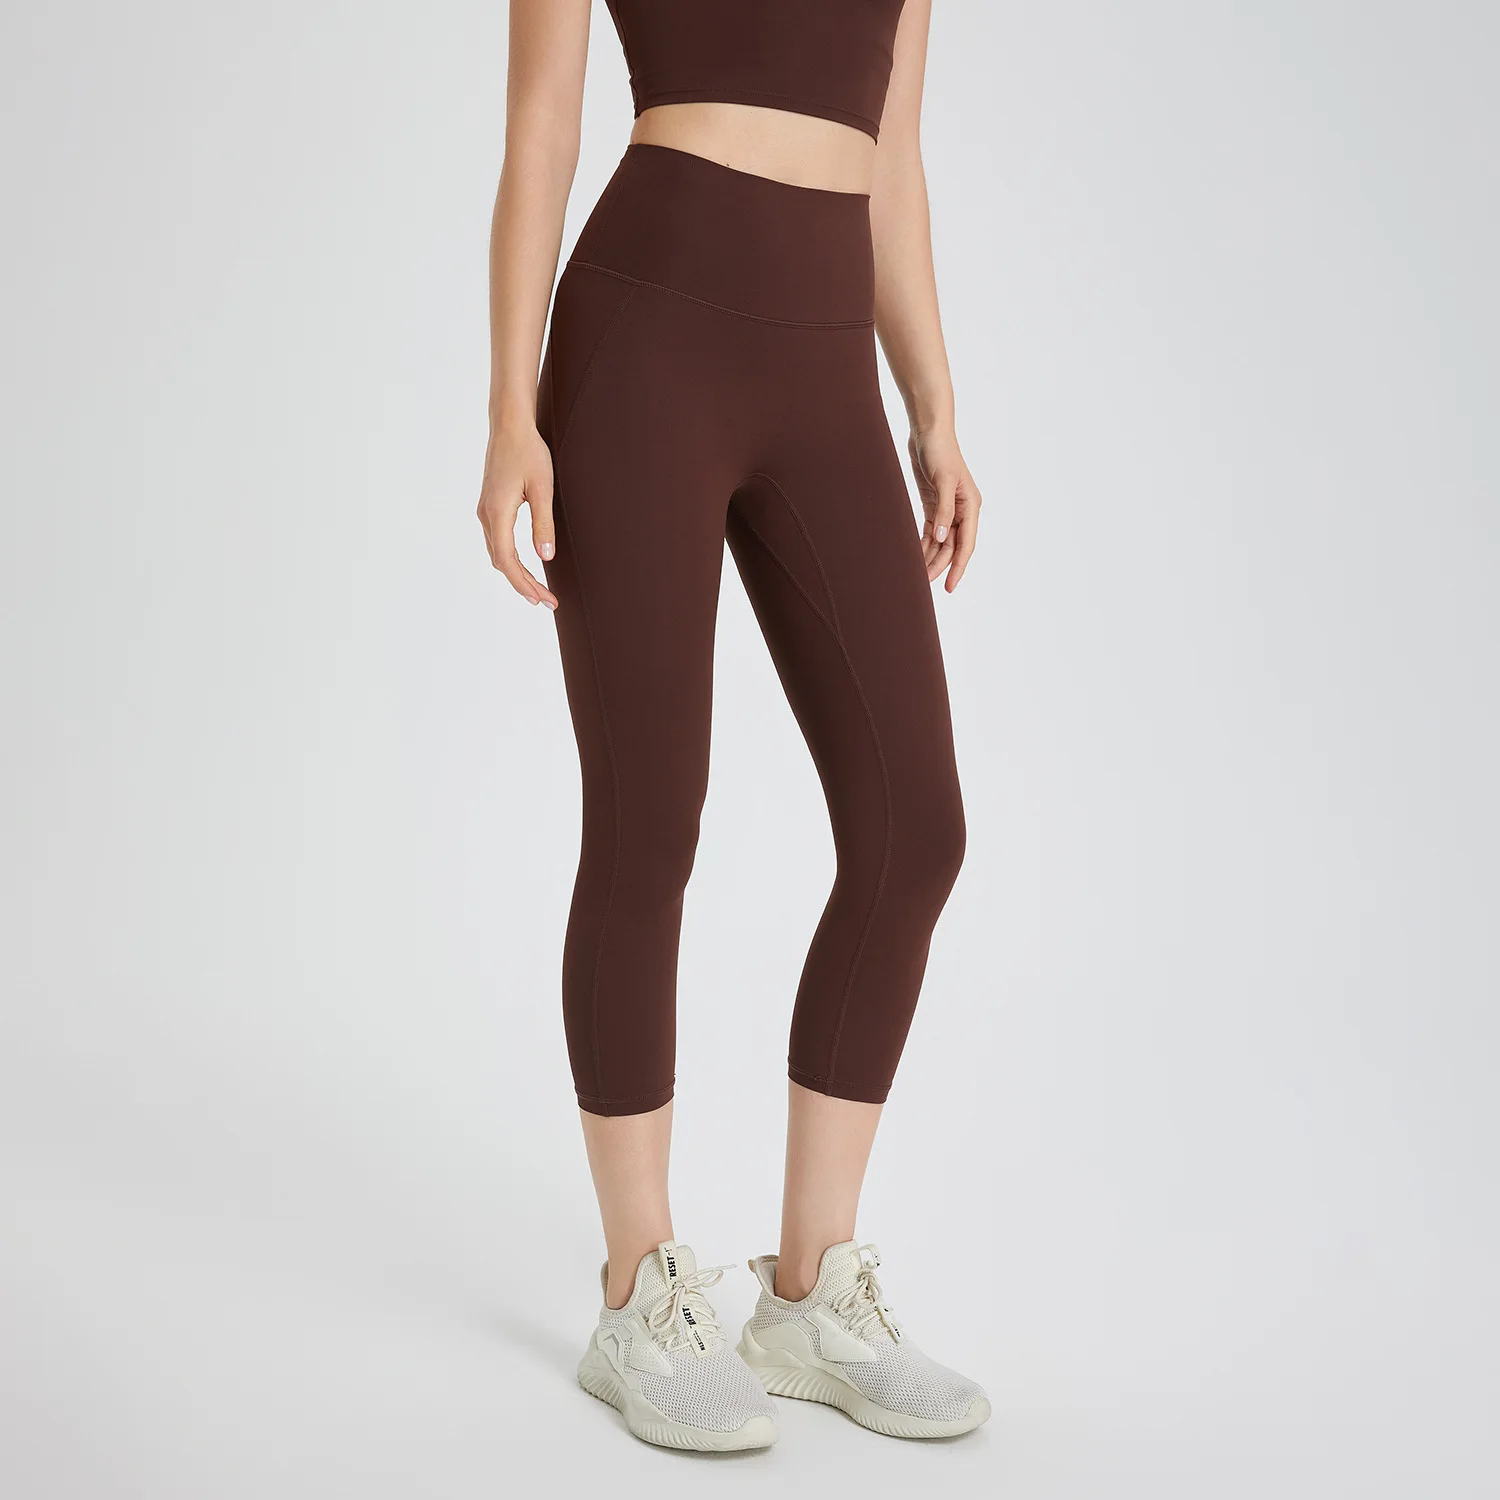 One-piece yoga pants back pocket peach butt tight gym pants - AliExpress